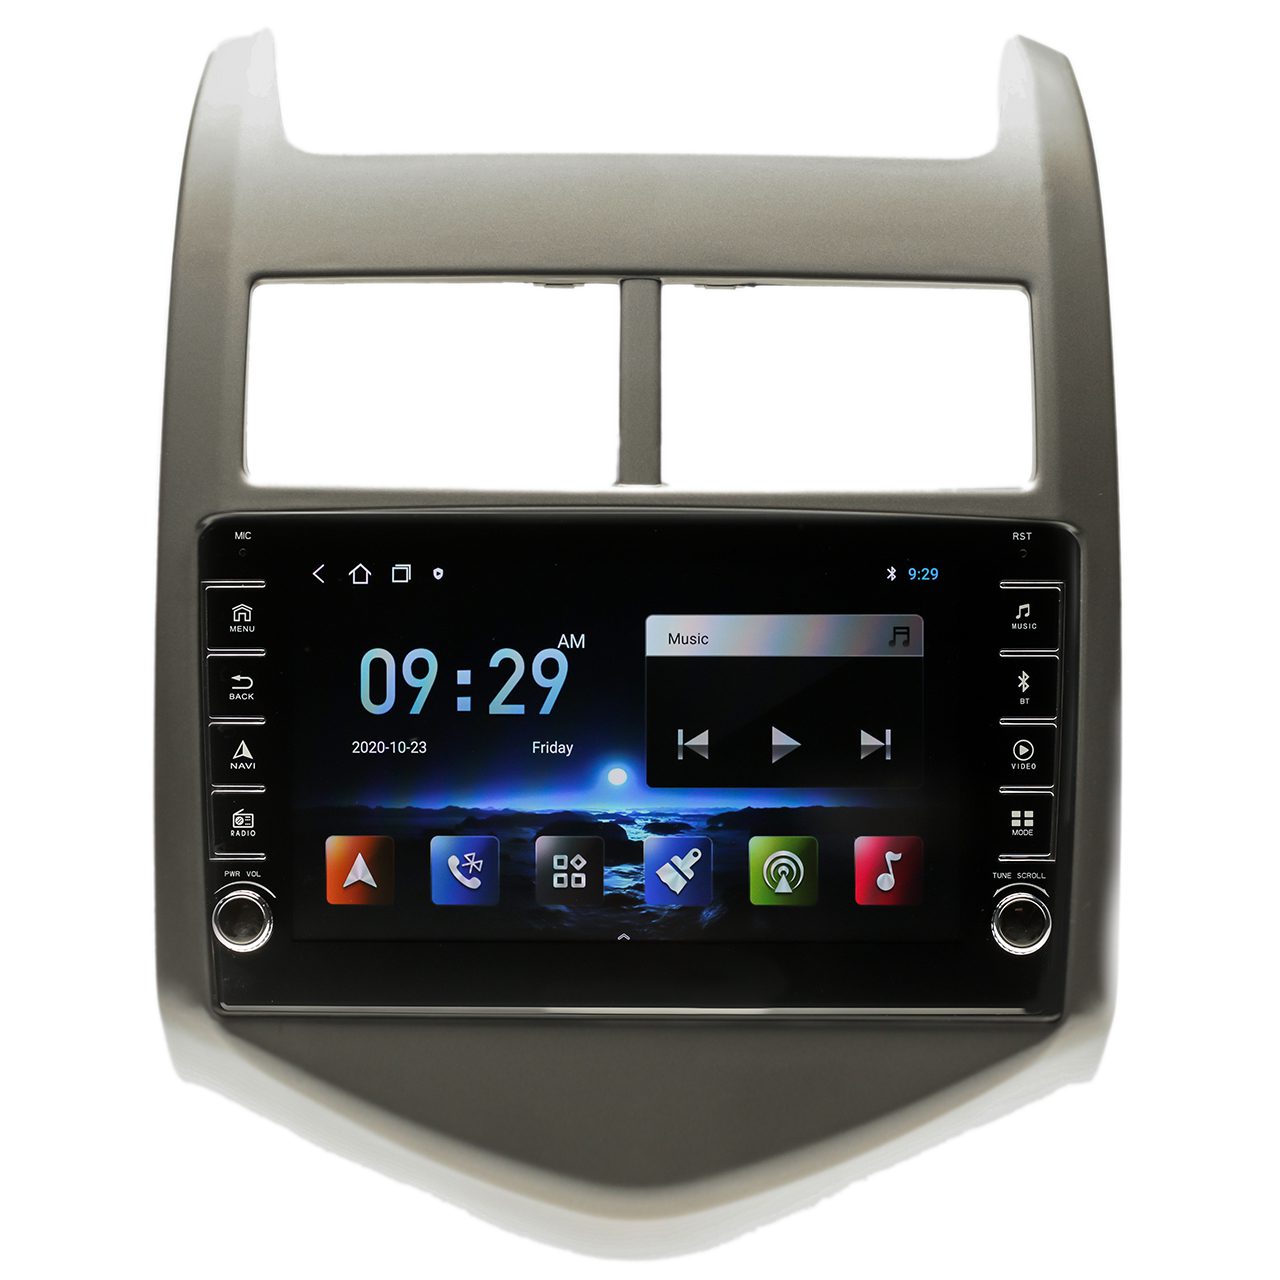 Navigatie AUTONAV Android GPS Dedicata Chevrolet Aveo T300 2011-2015, Model PRO Memorie 32GB Stocare, 2GB DDR3 RAM, Butoane Laterale Si Regulator Volum, Display 8